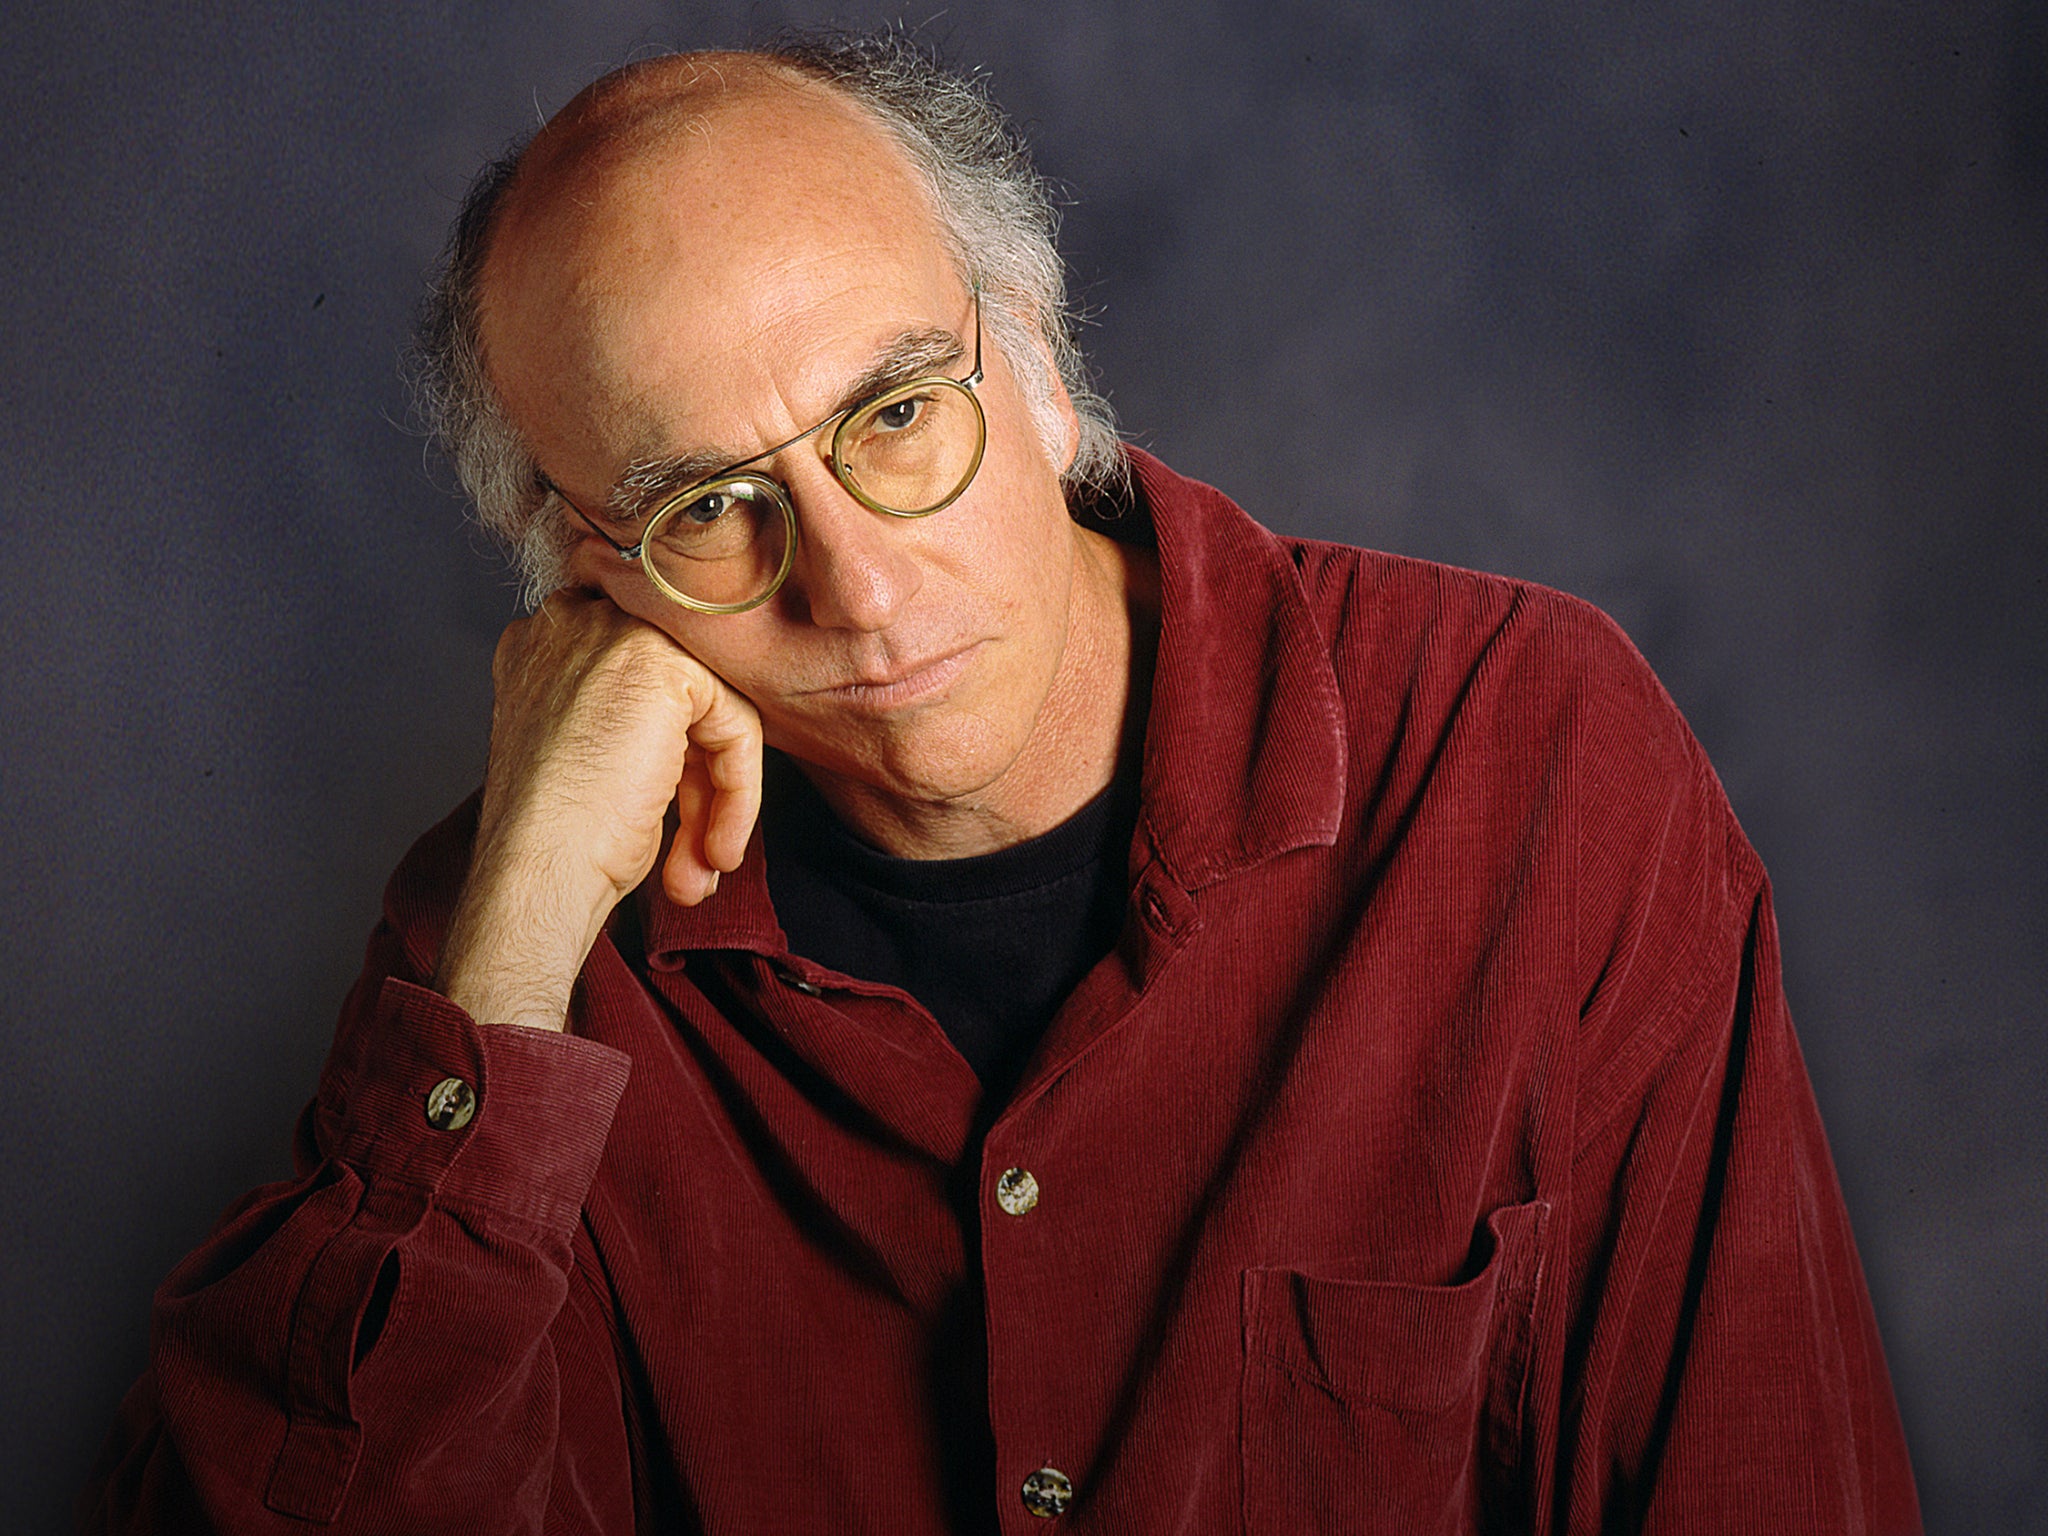 The ‘Seinfeld’ co-creator plays himself on the improv-heavy show